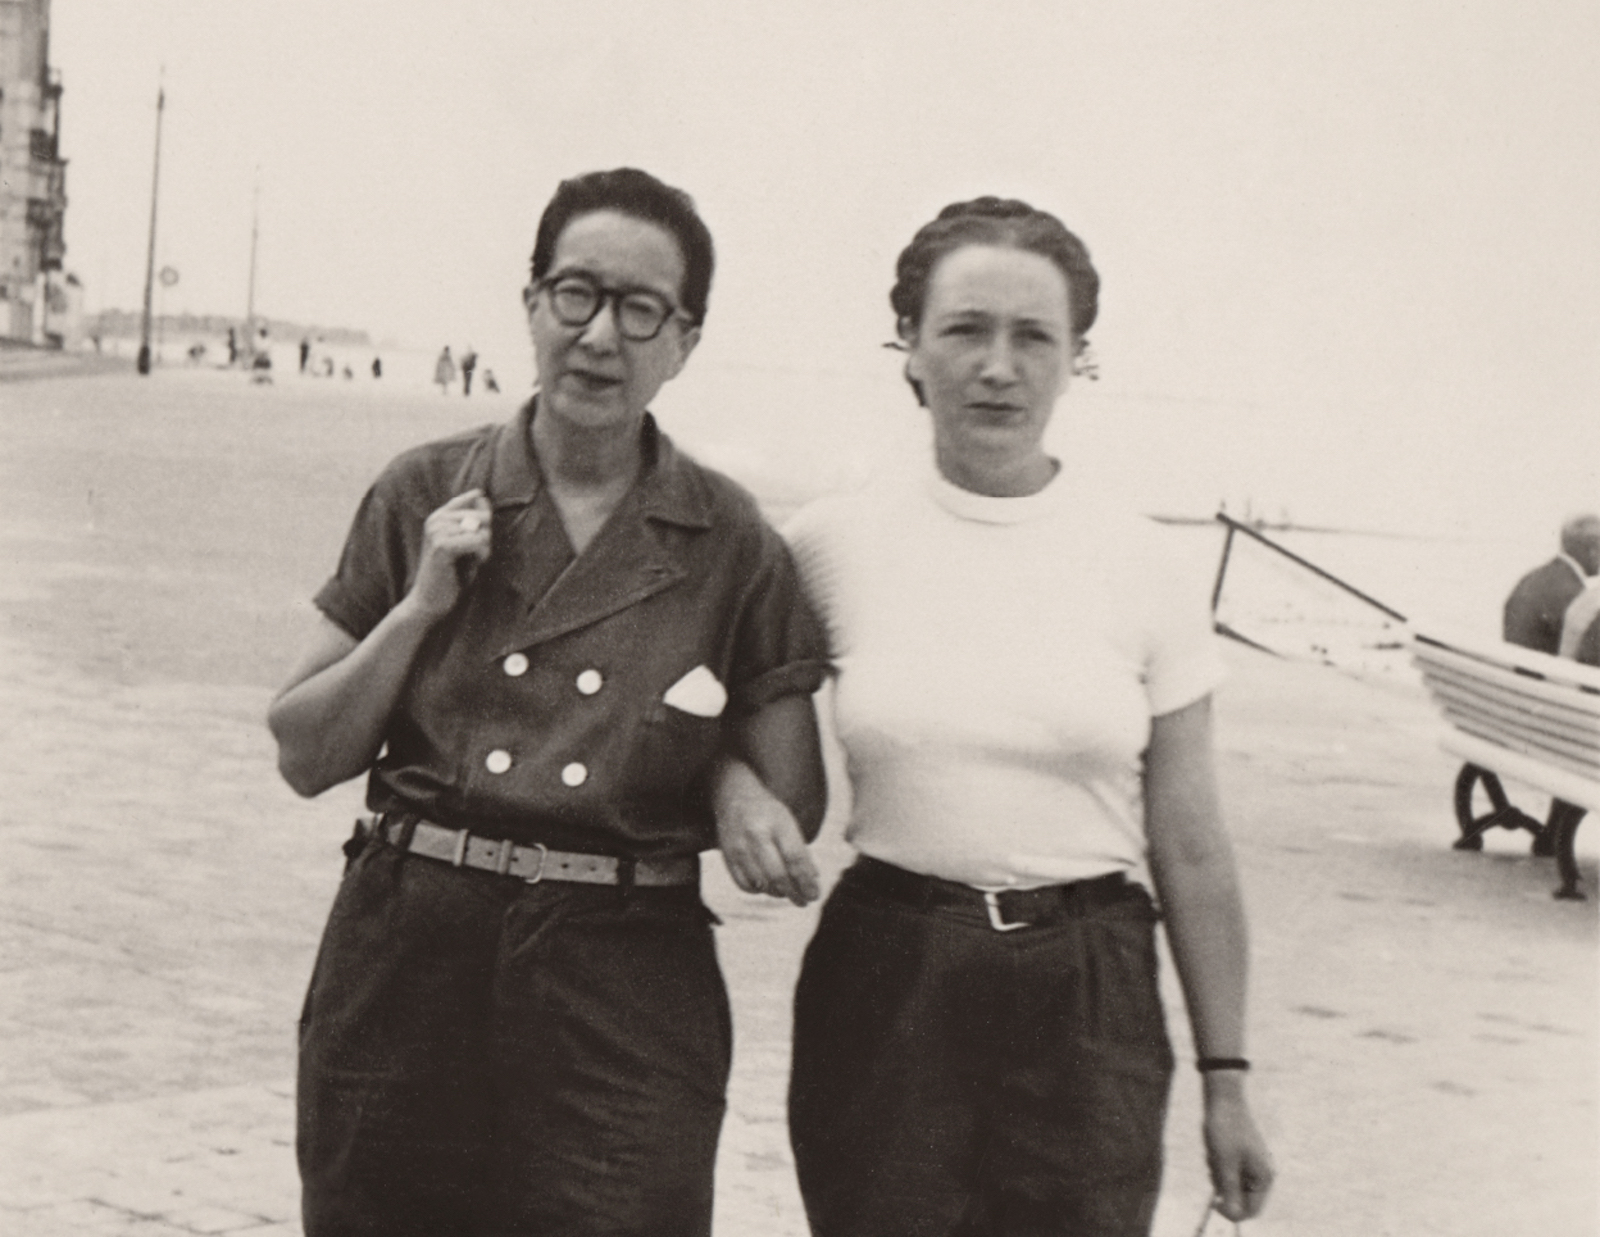 Two women walking down a beach, arm in arm